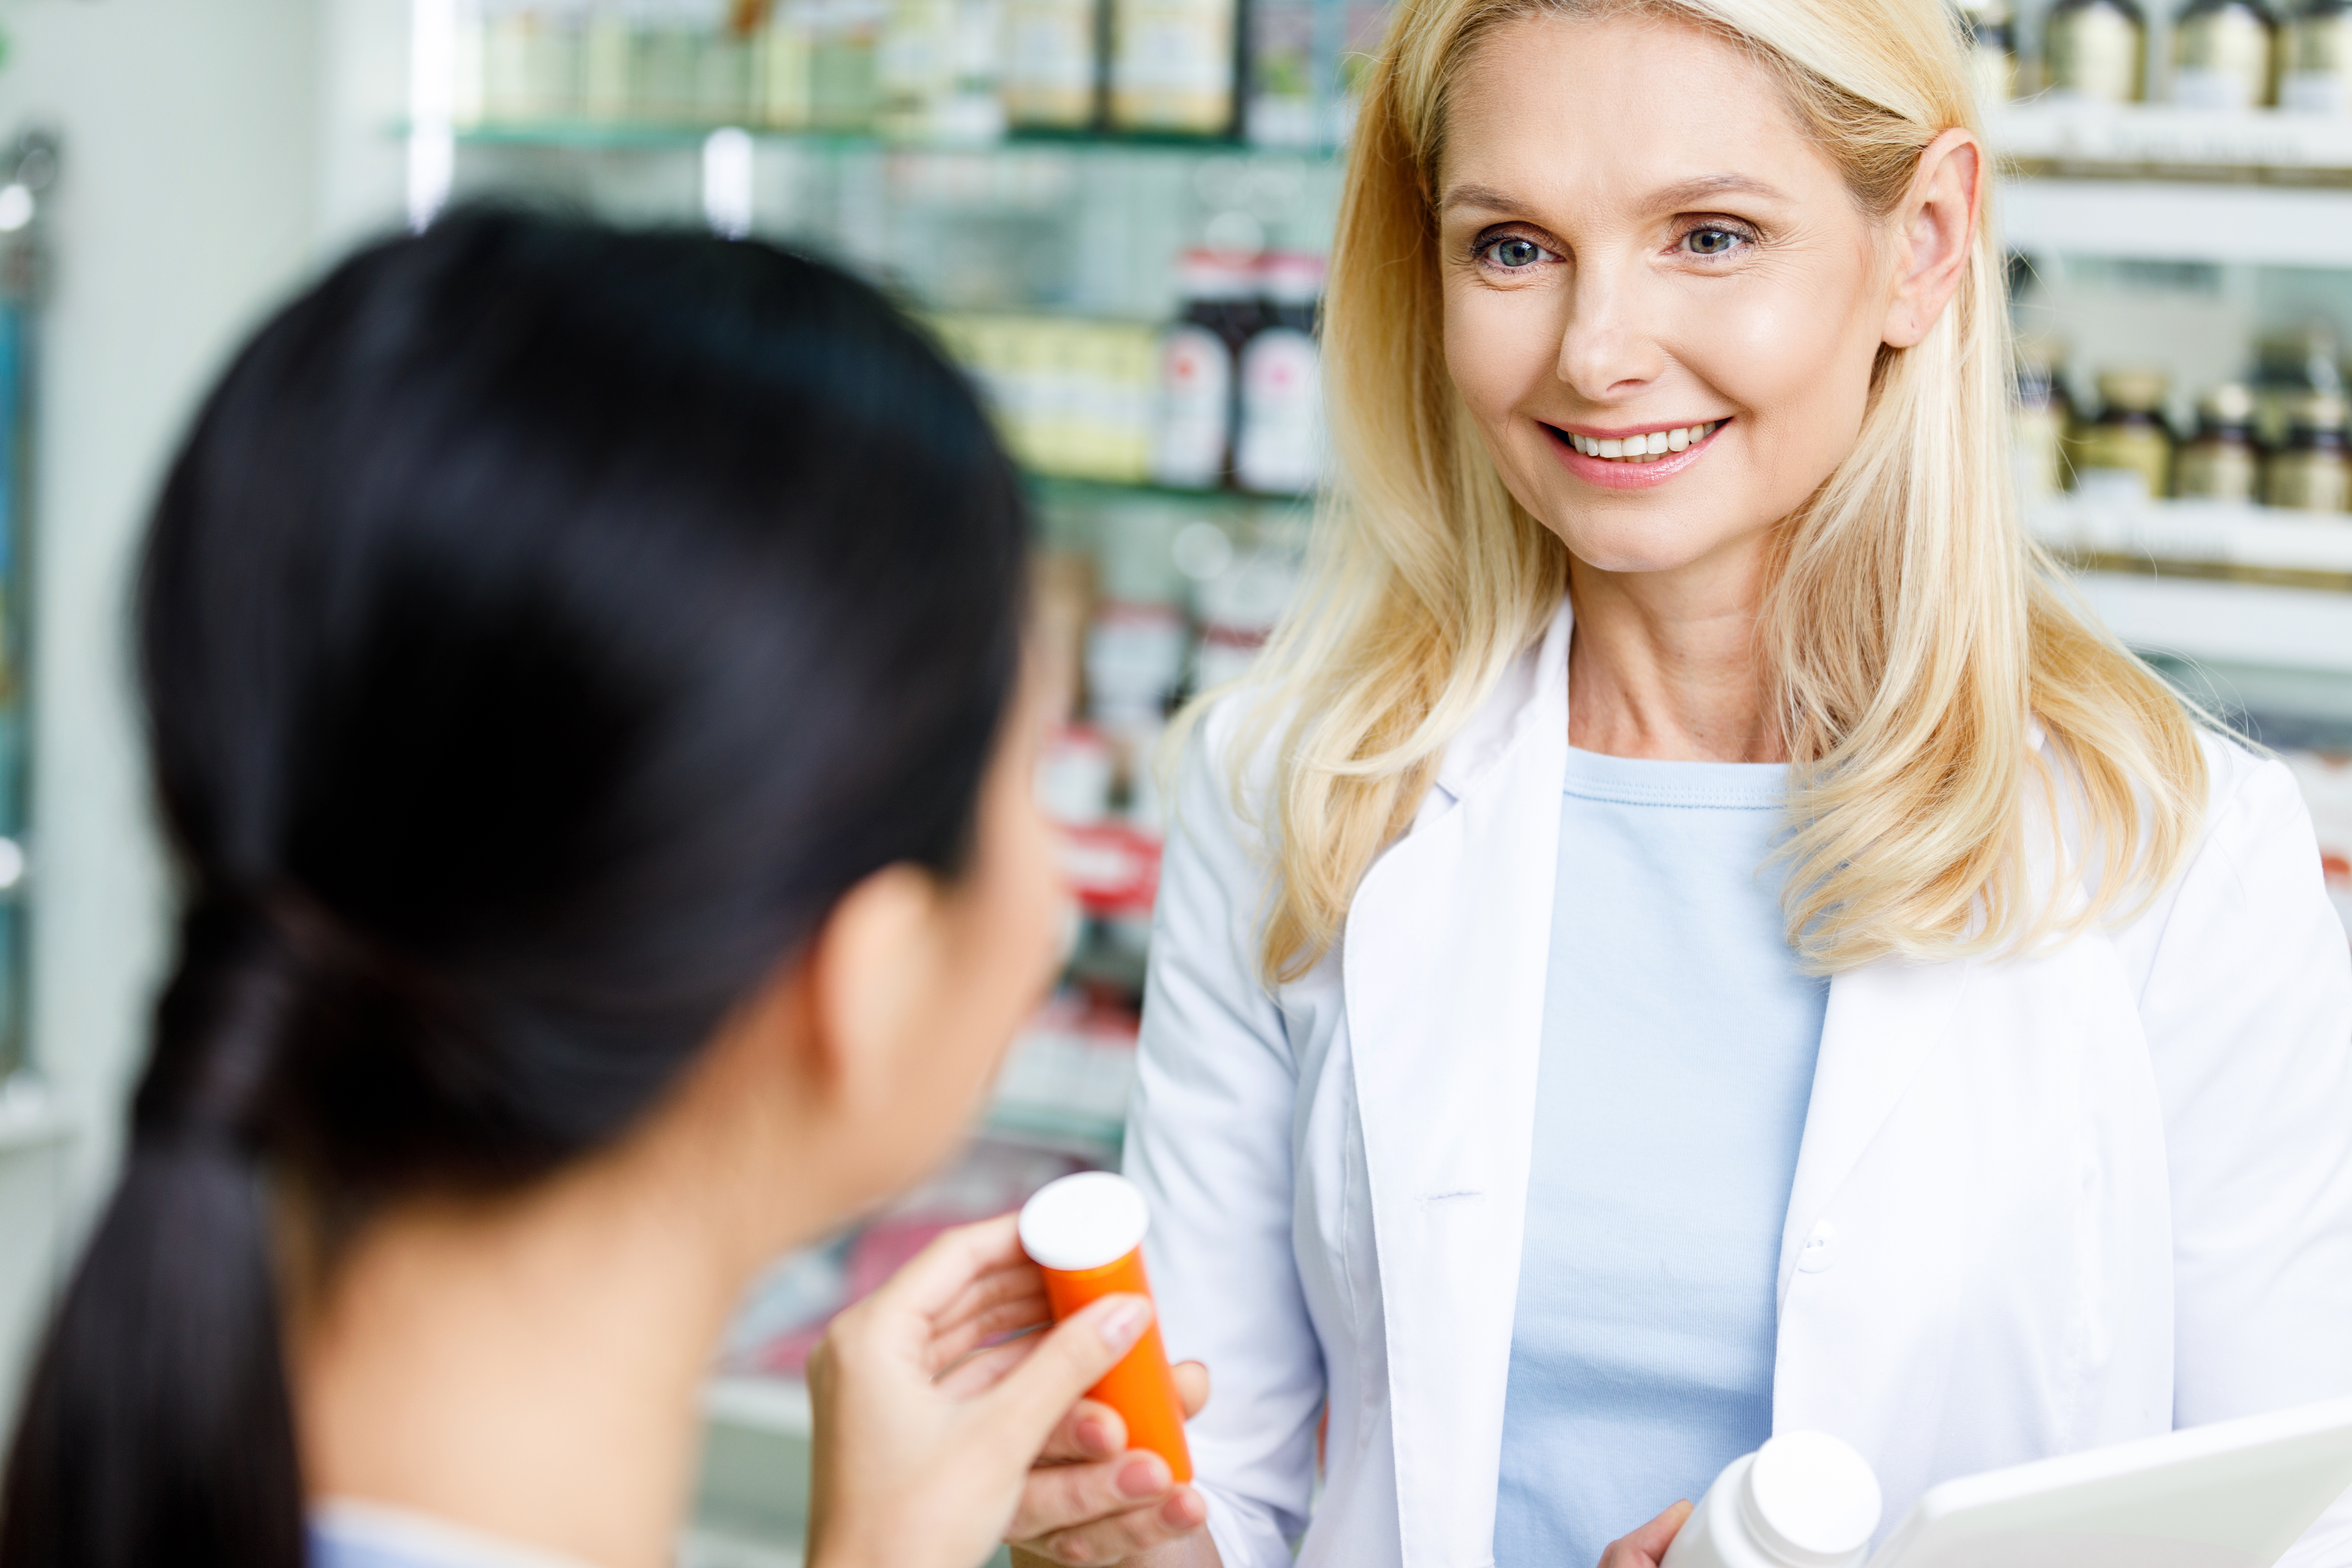 pharmacist image